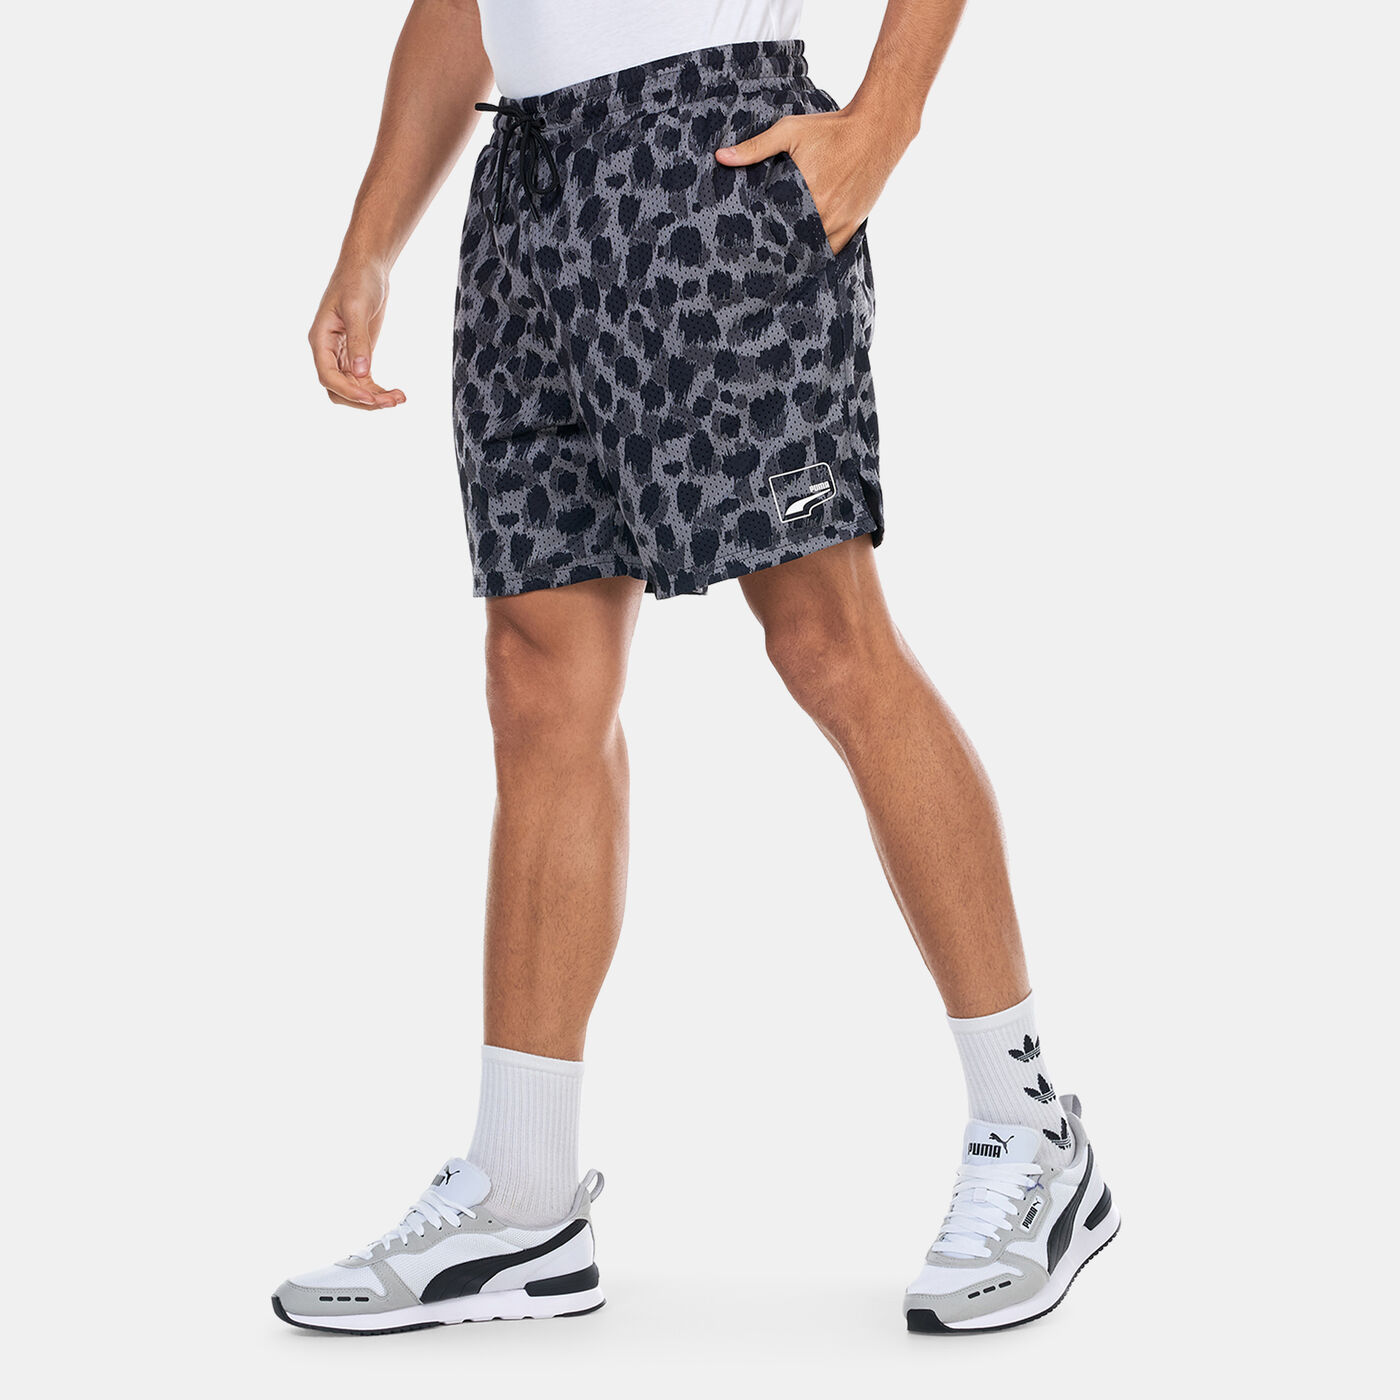 Men's UPTOWN Printed Shorts